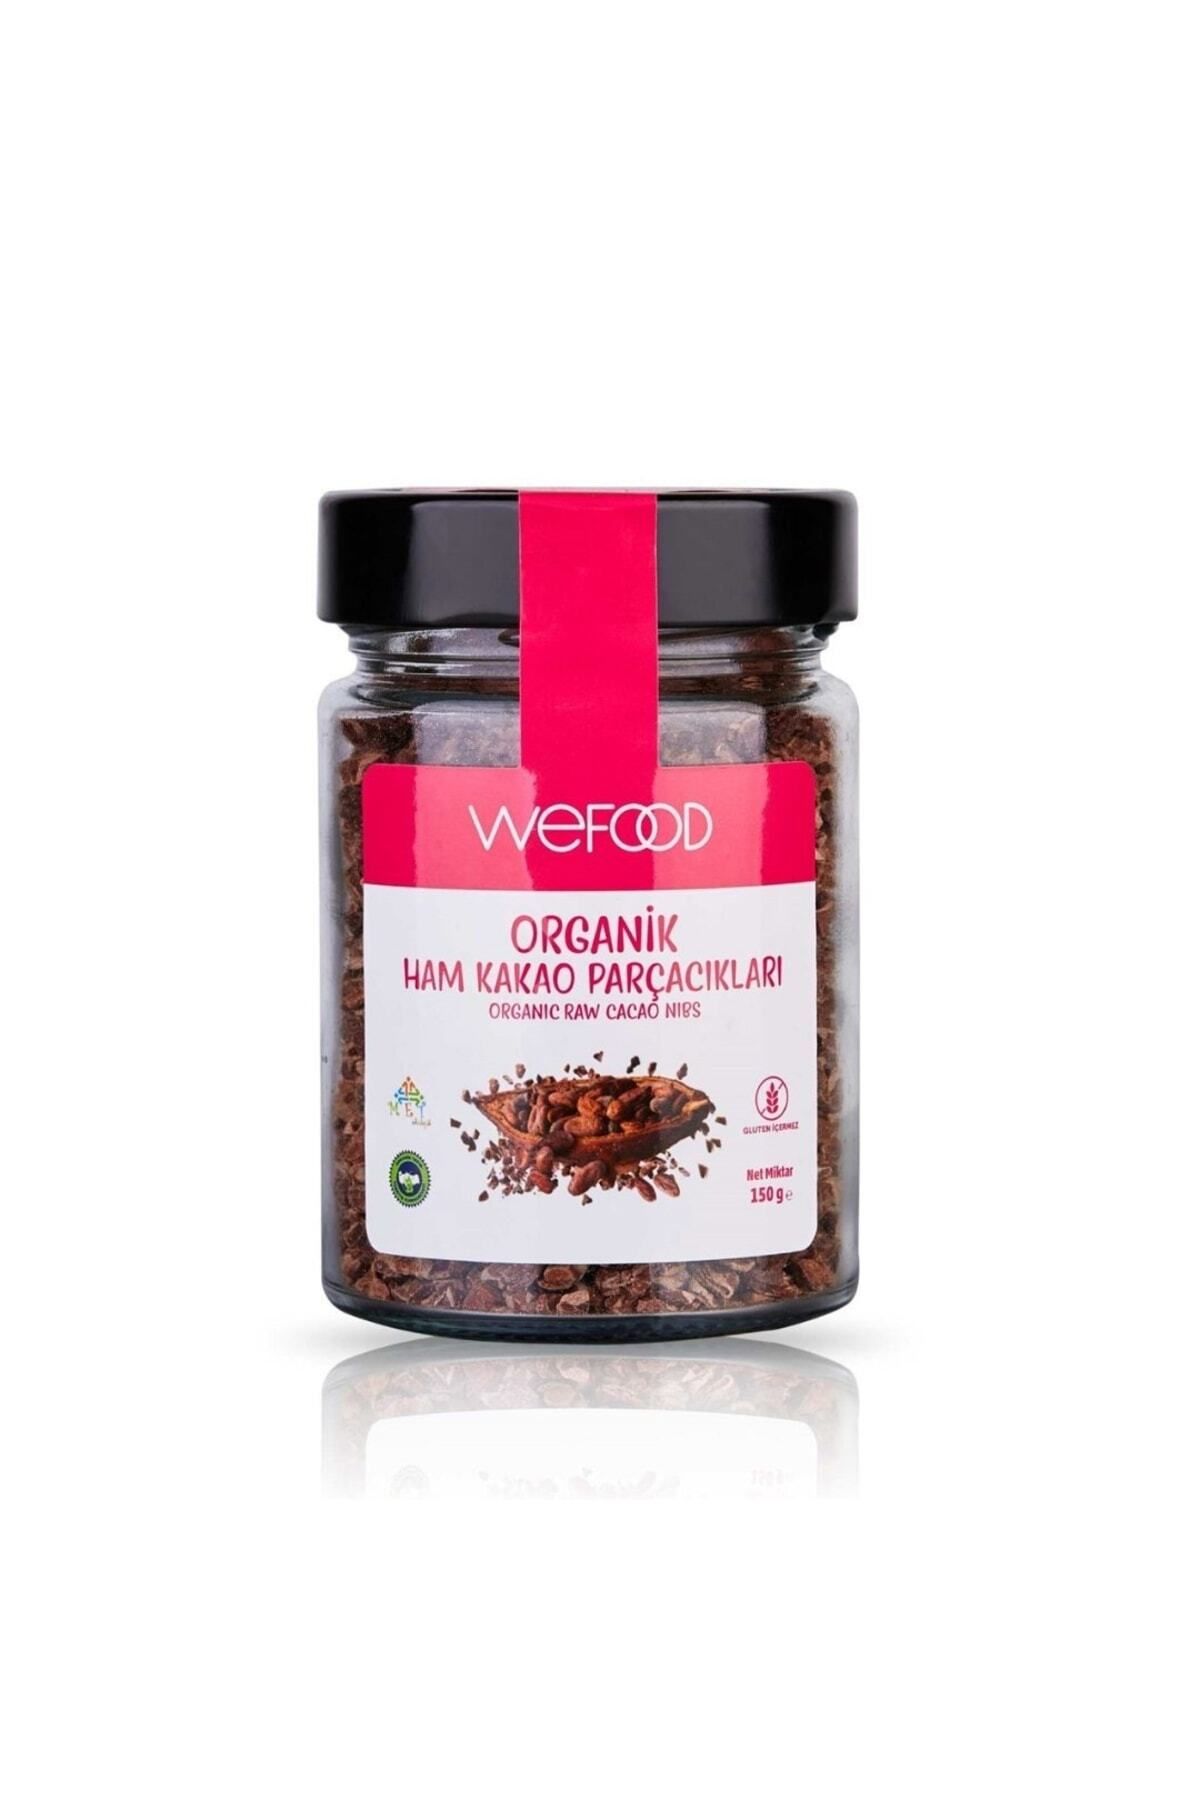 Wefood Organik Ham Kakao Parçacıkları 150 Gr (kakao Nibs)